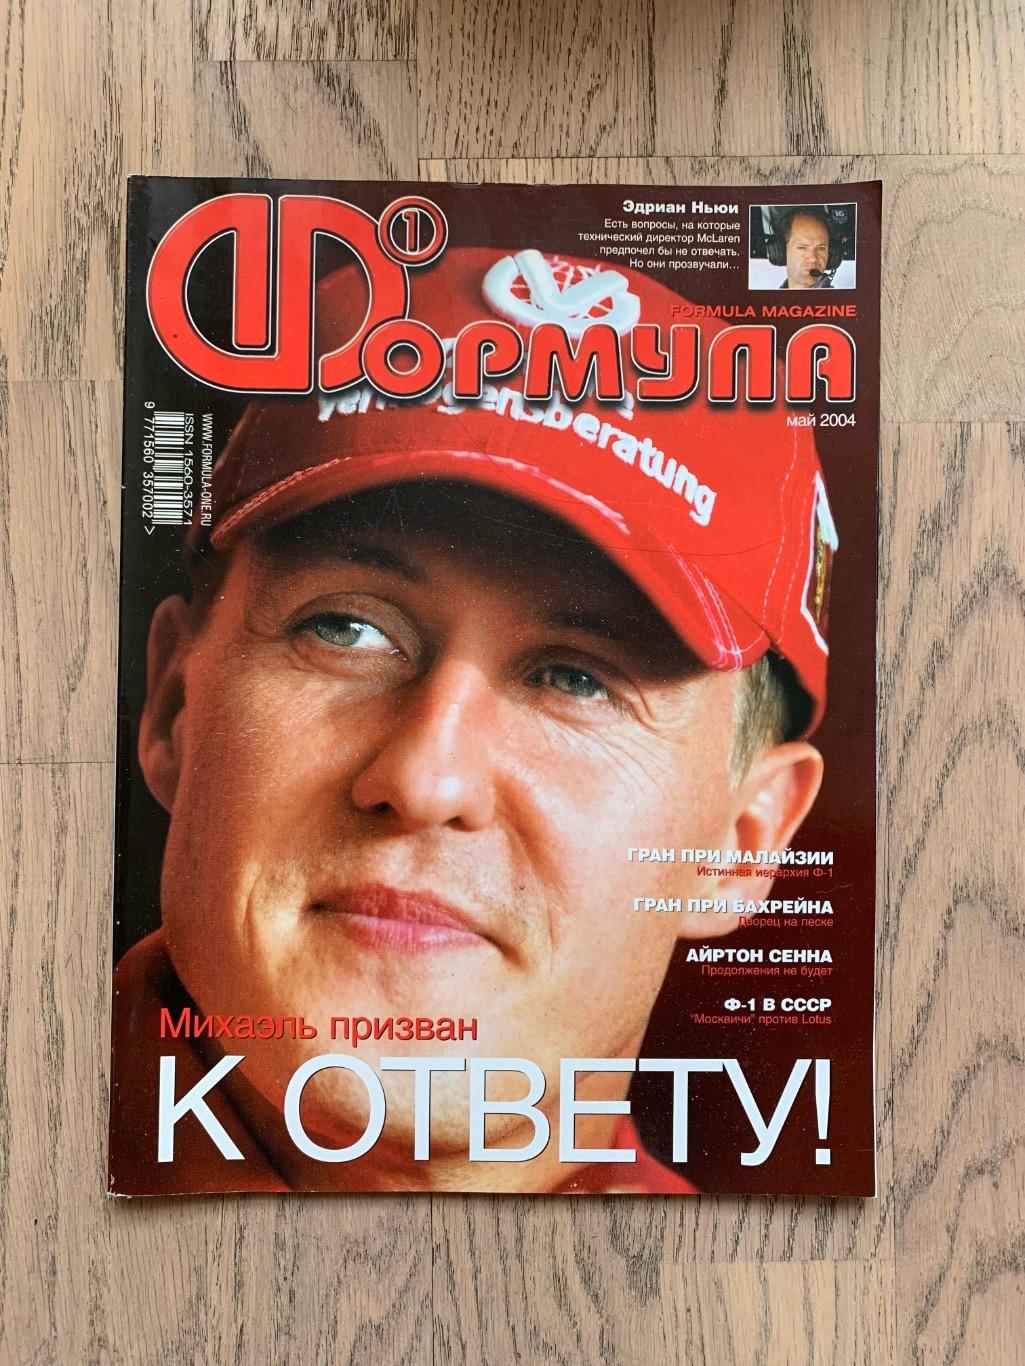 Журнал Формула 1 (Formula Magazine) / май 2004